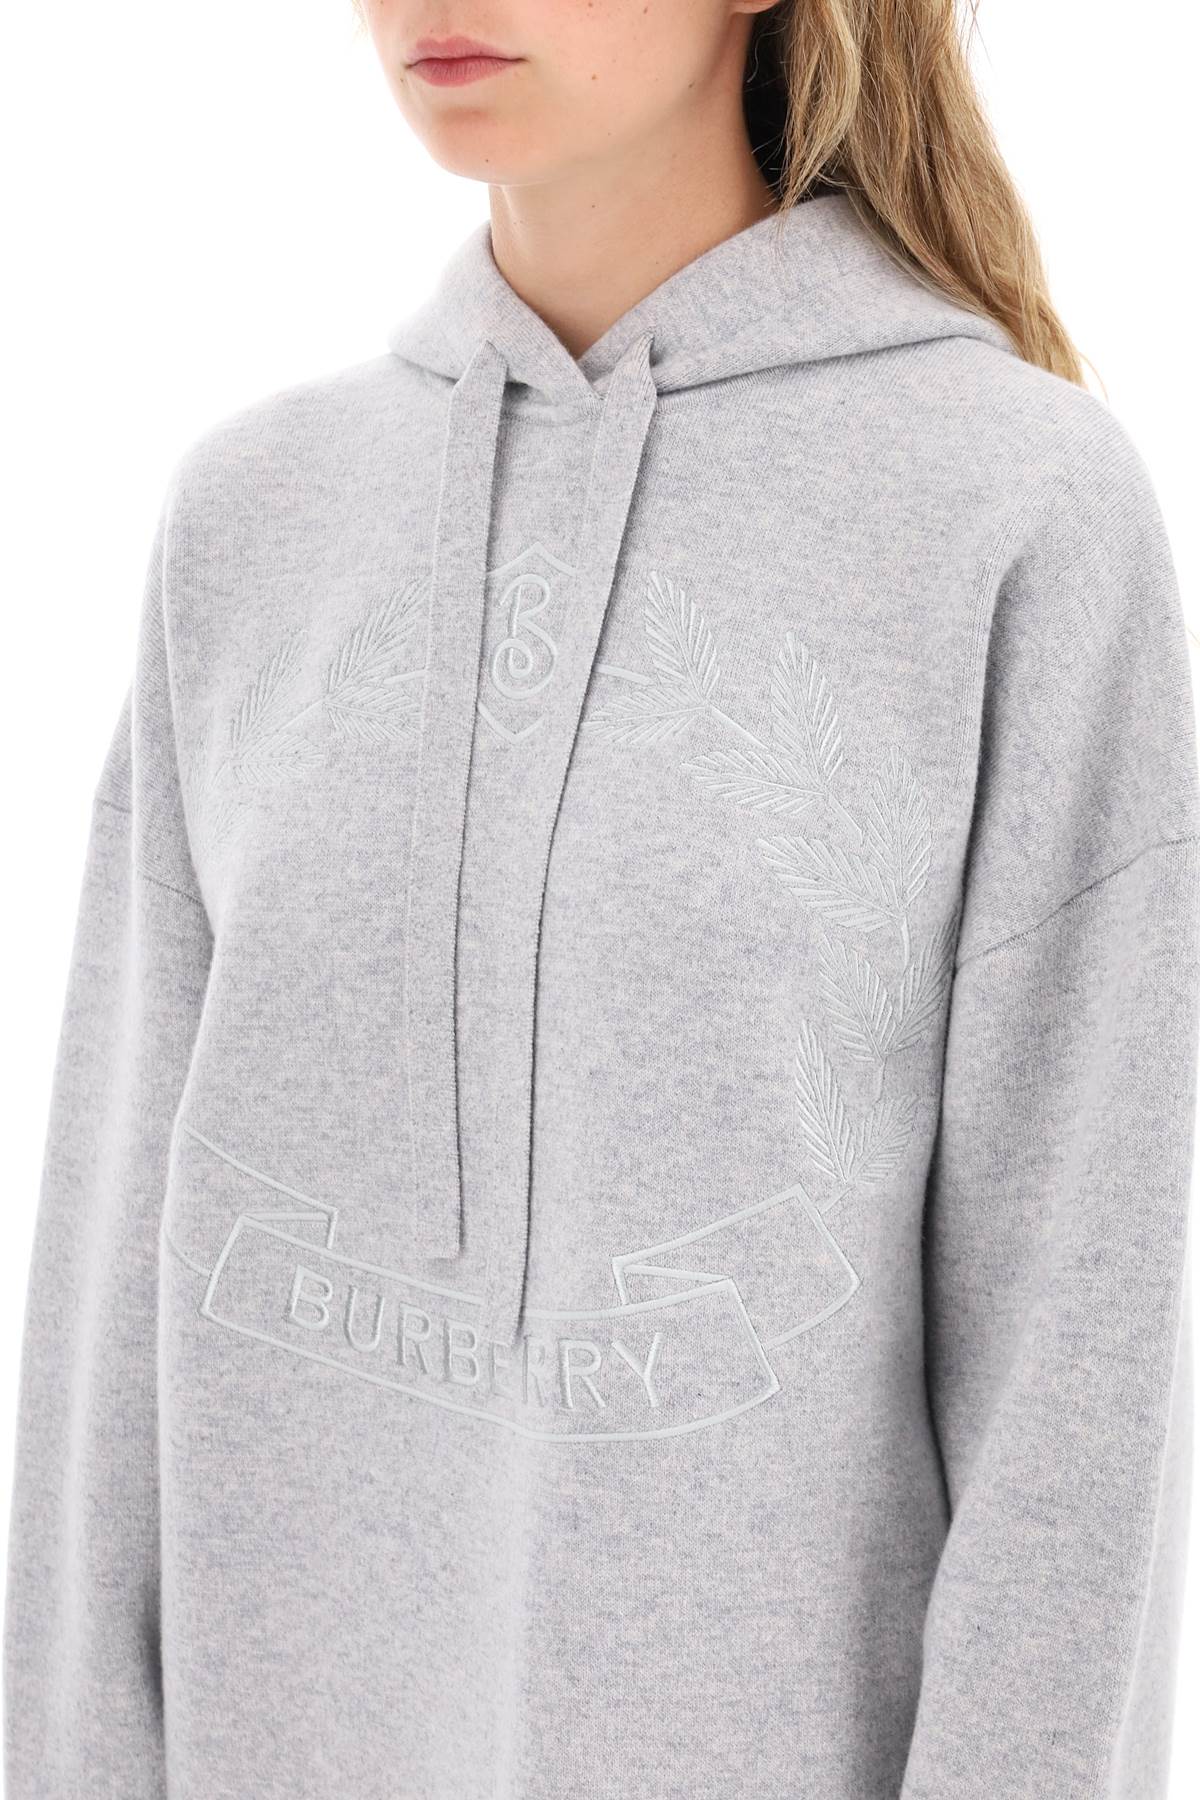 Burberry 'cristiana' cashmere blend hoodie